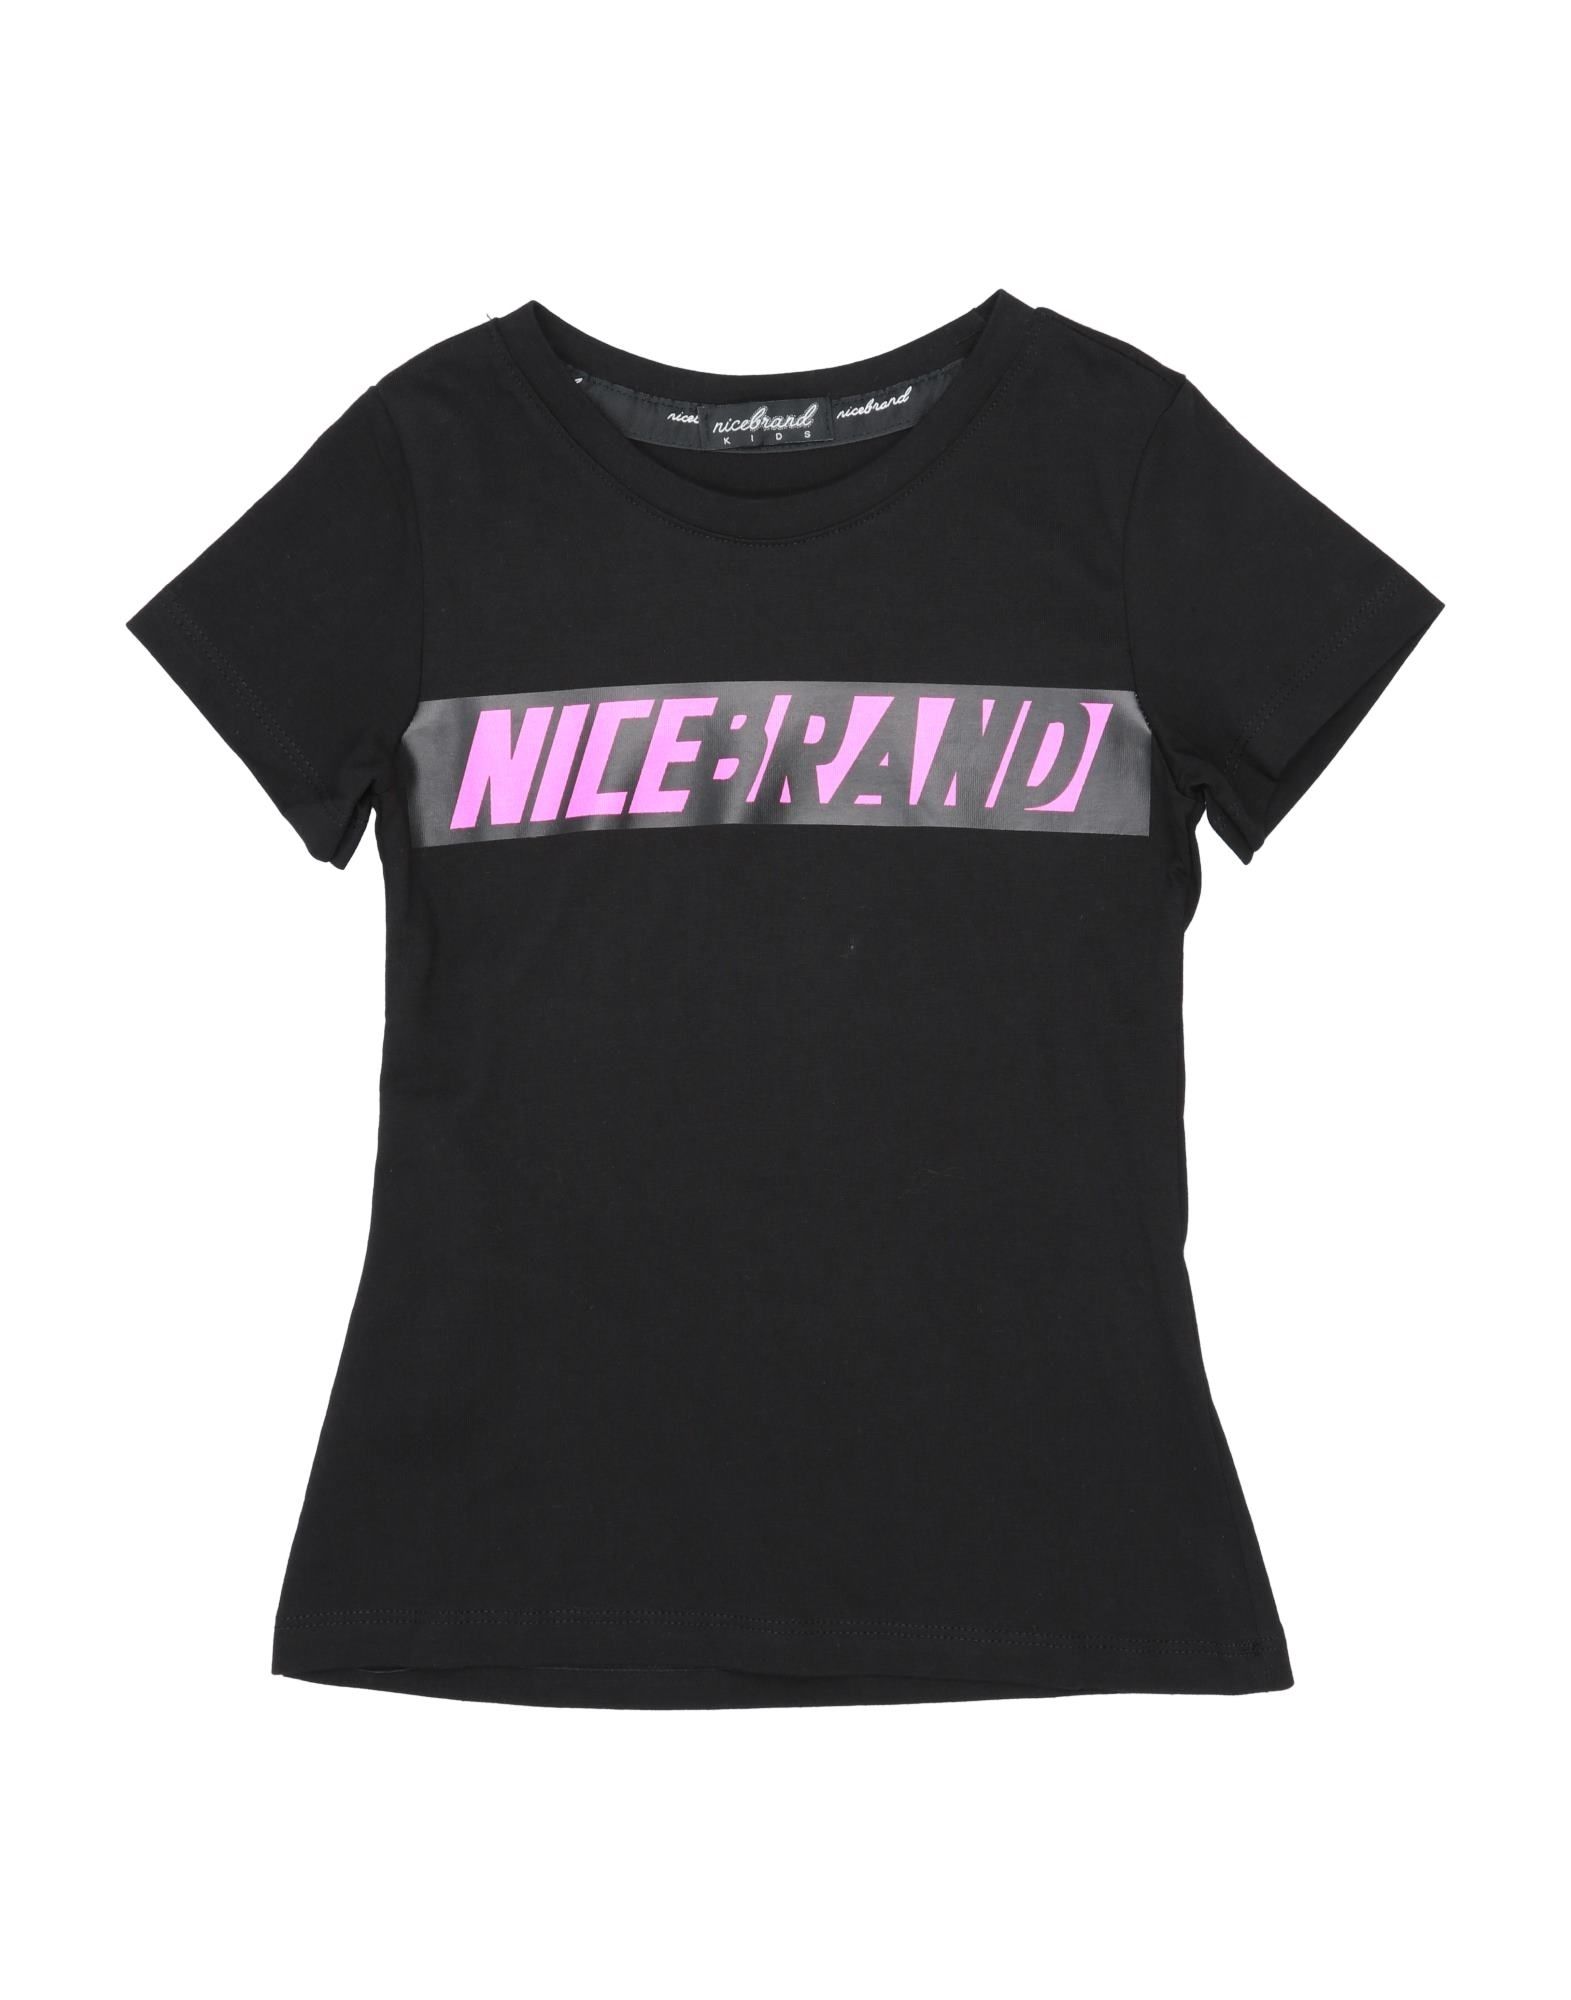 Nicebrand Kids' T-shirts In Black